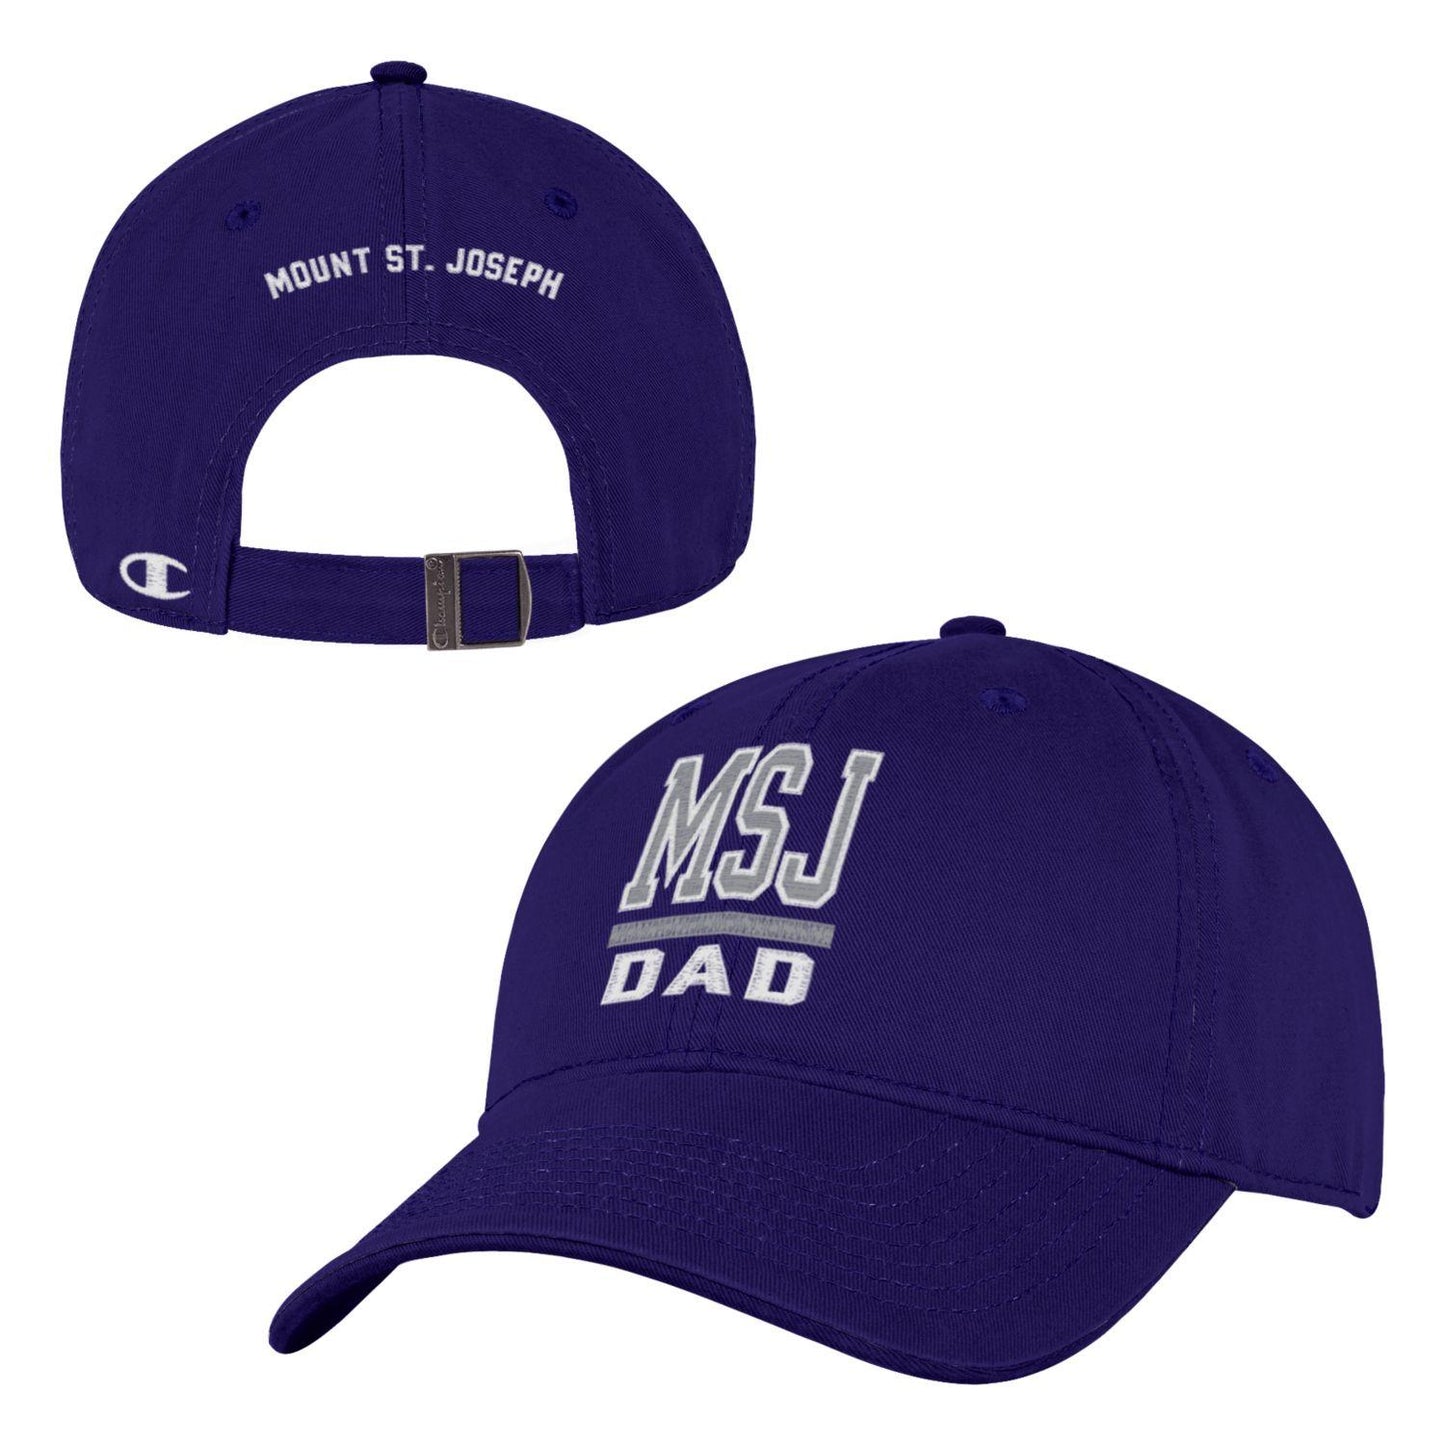 MSJ "Dad" hat